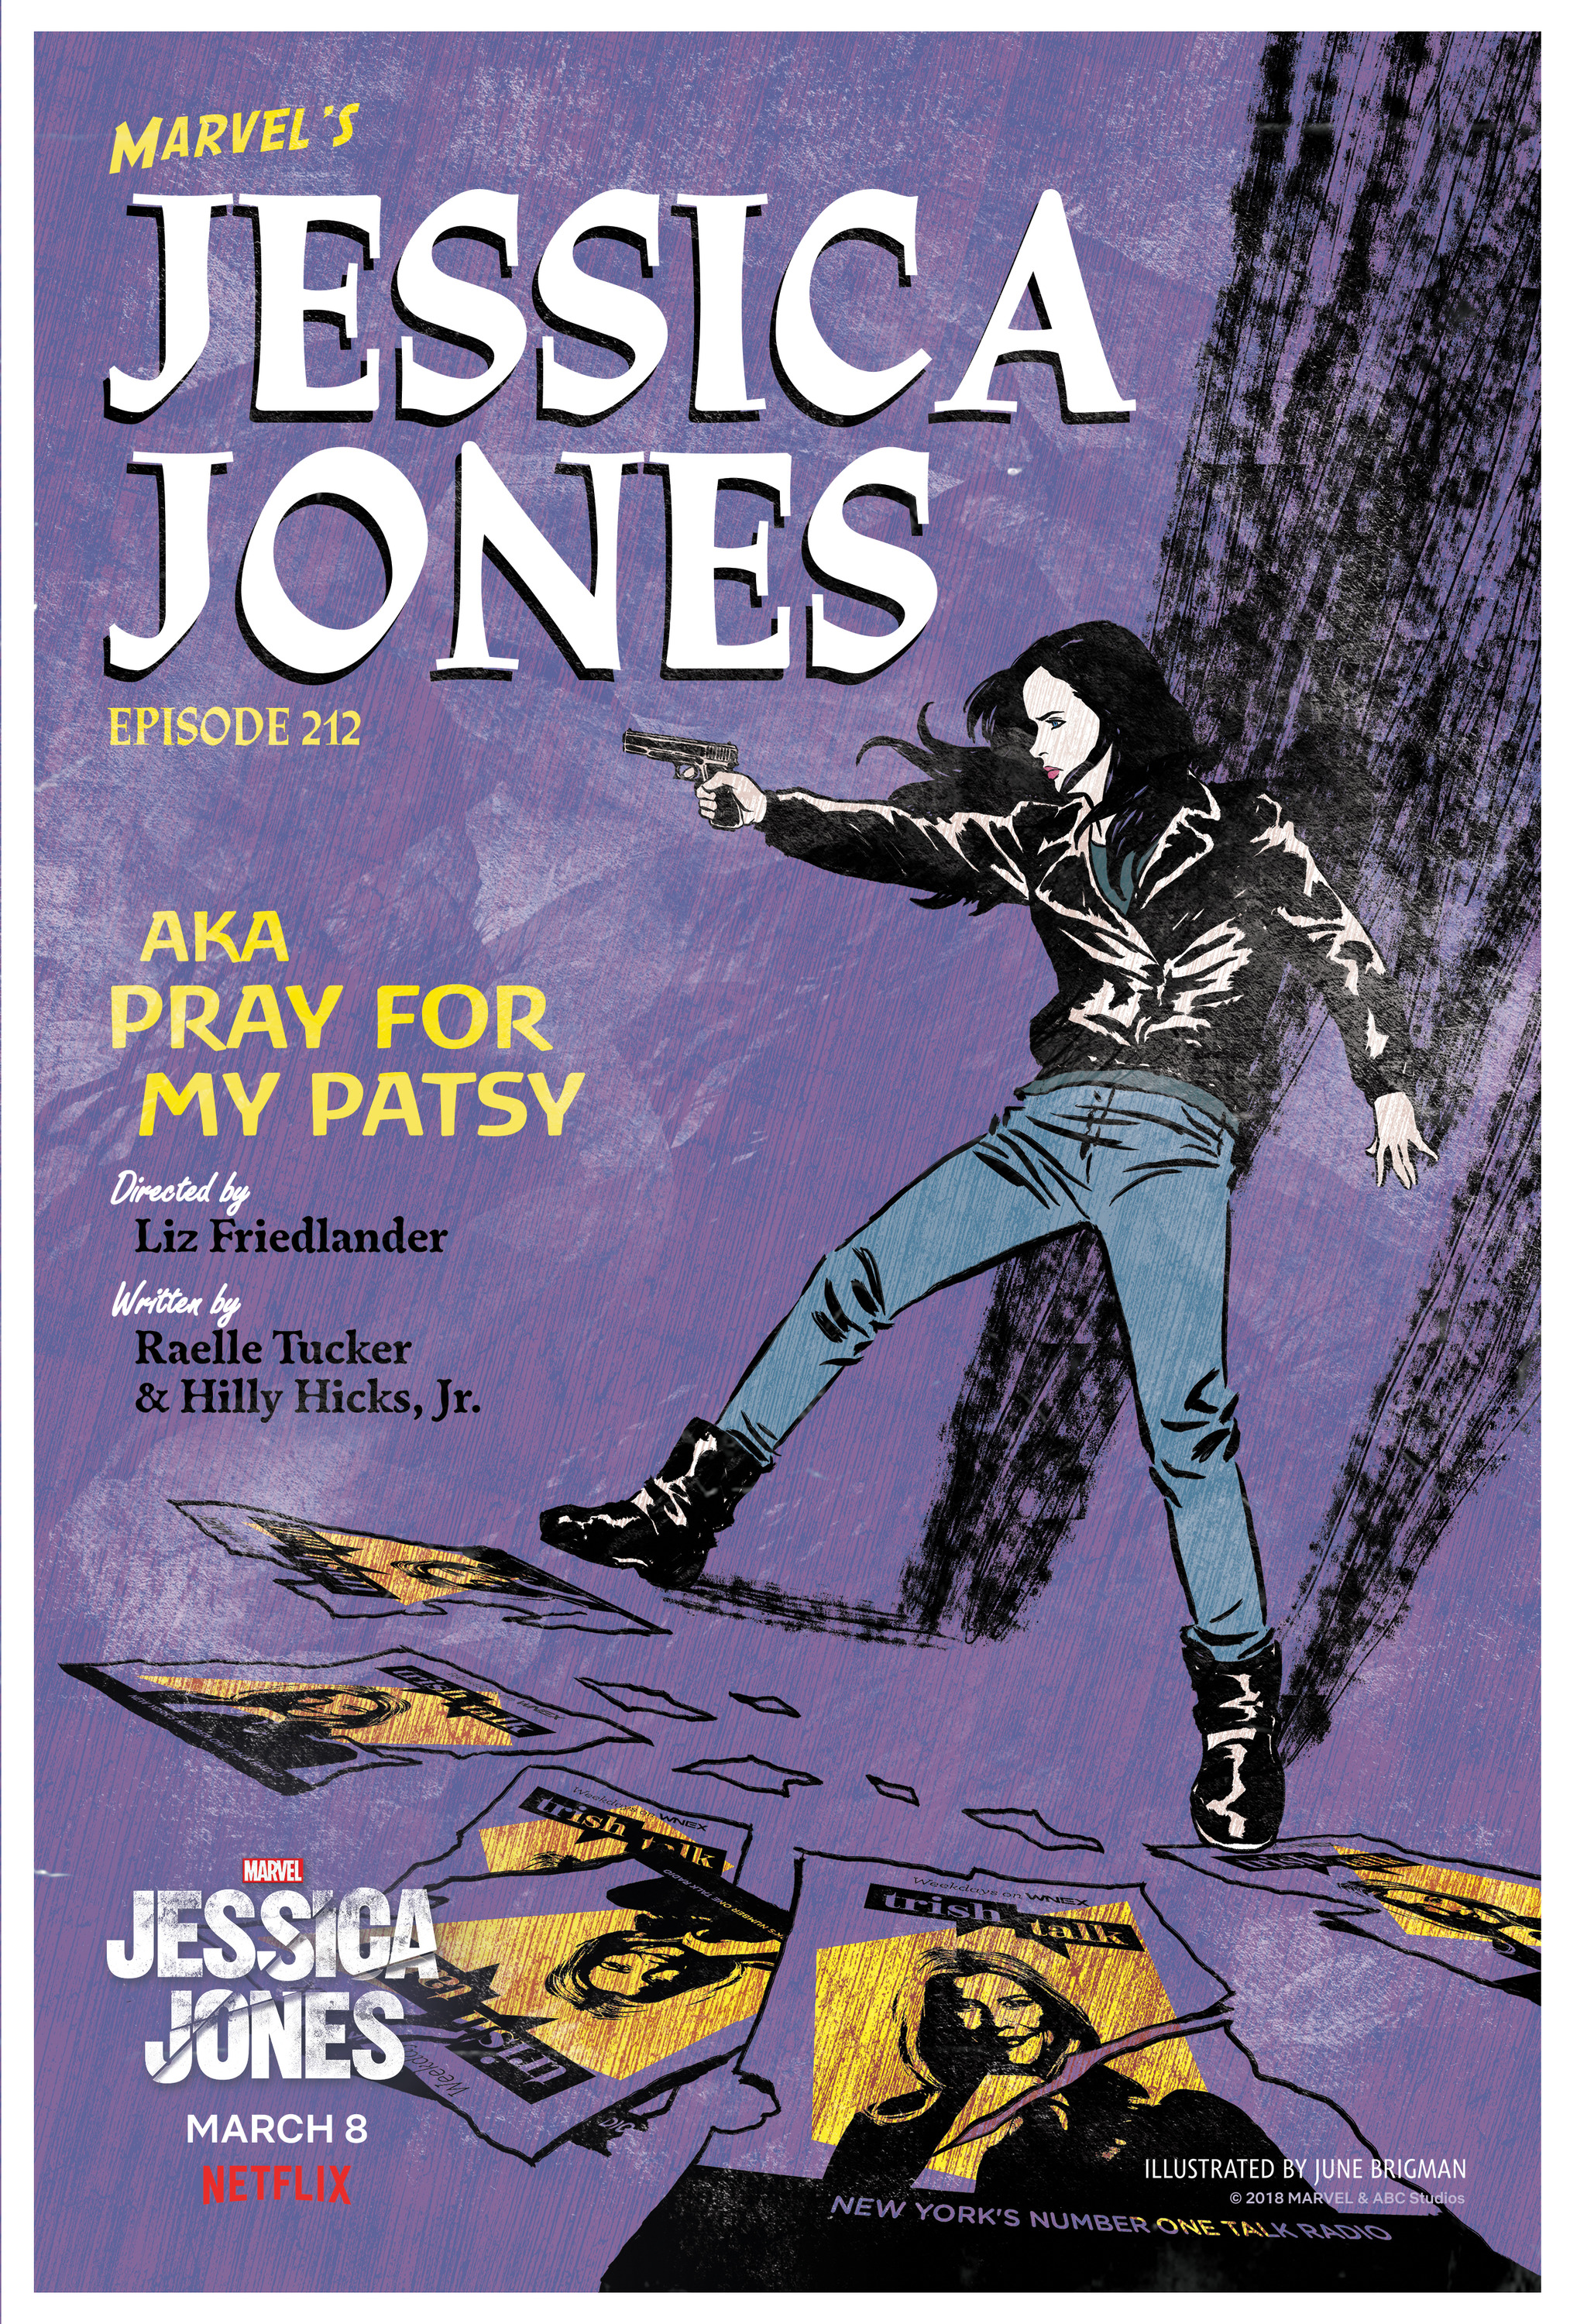 Mega Sized TV Poster Image for Jessica Jones (#18 of 21)